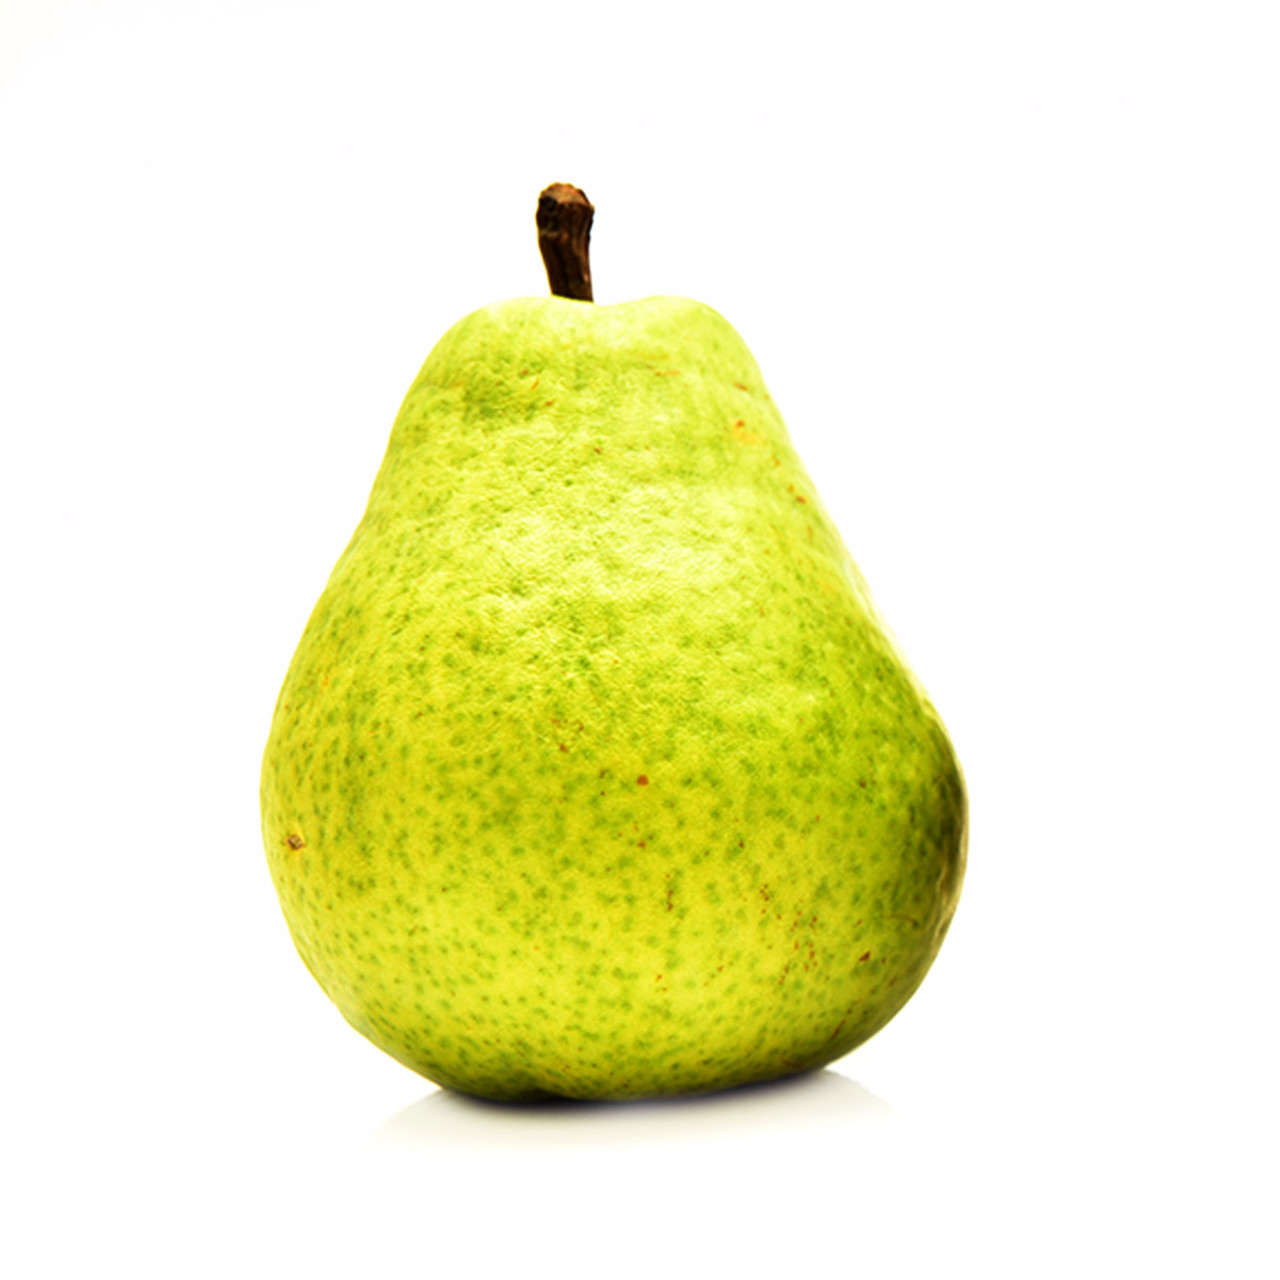 Premium Photo  Pears fresh sweet organic pears with leaves on